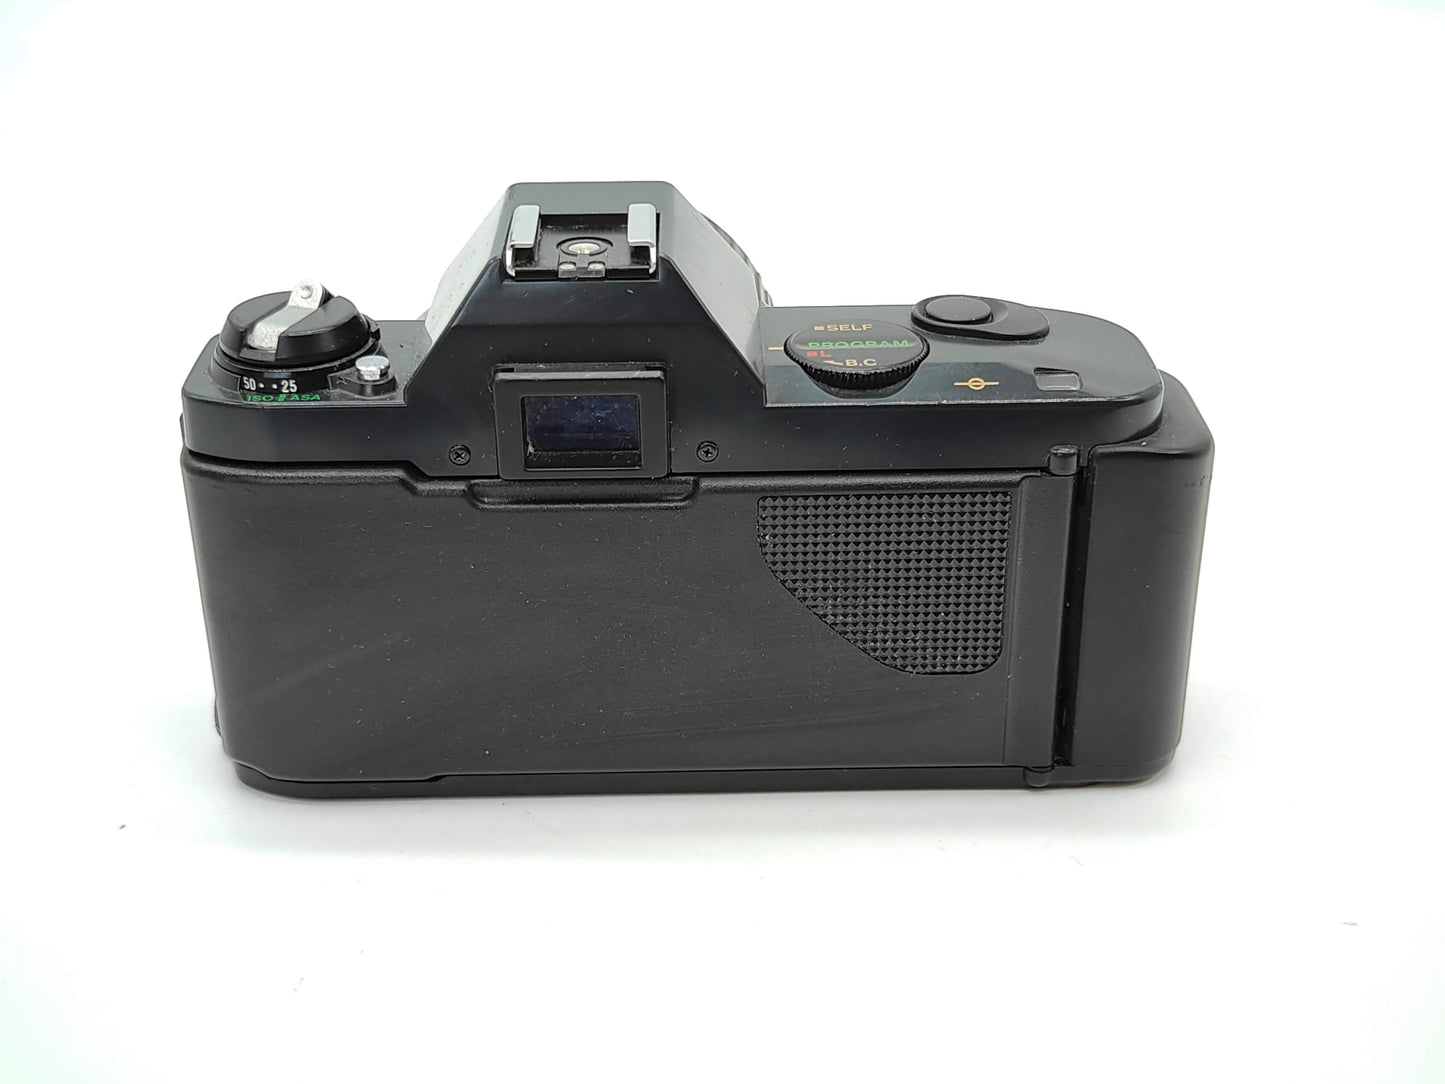 Canon T50 SLR camera + 35-70 zoom lens